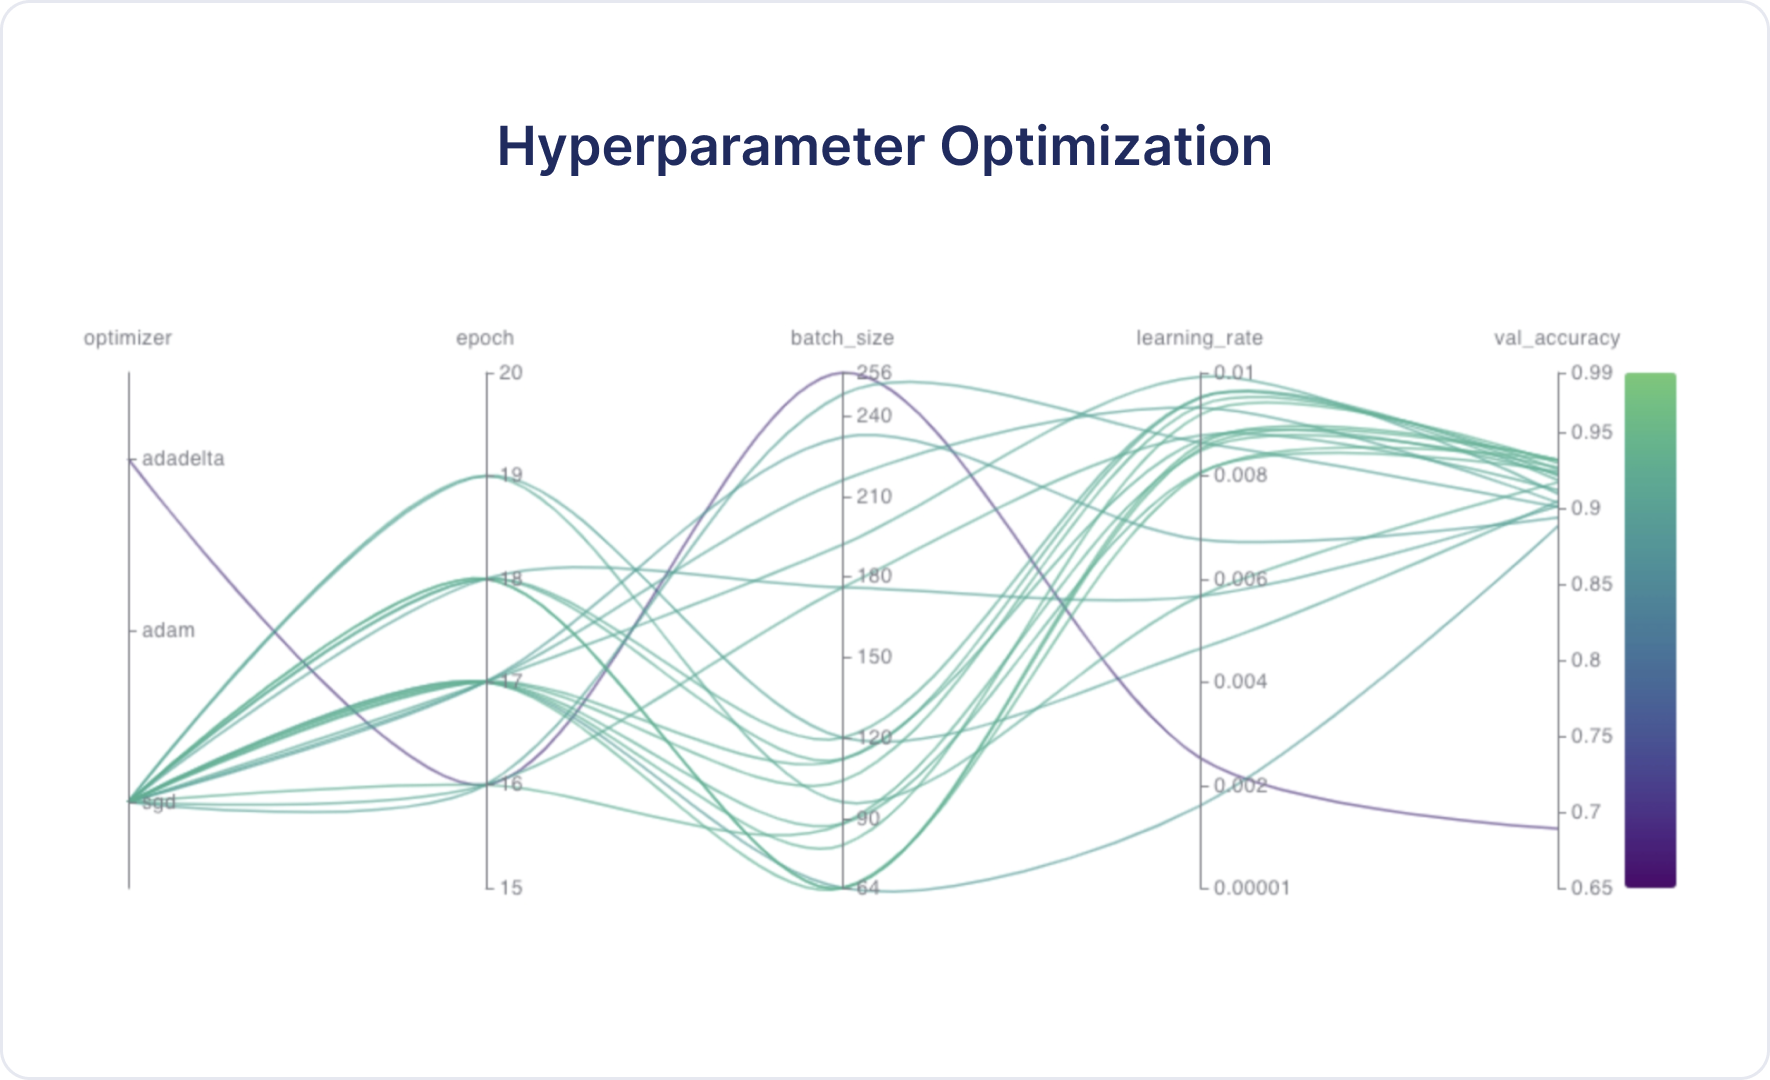 Hyperparameter optimization